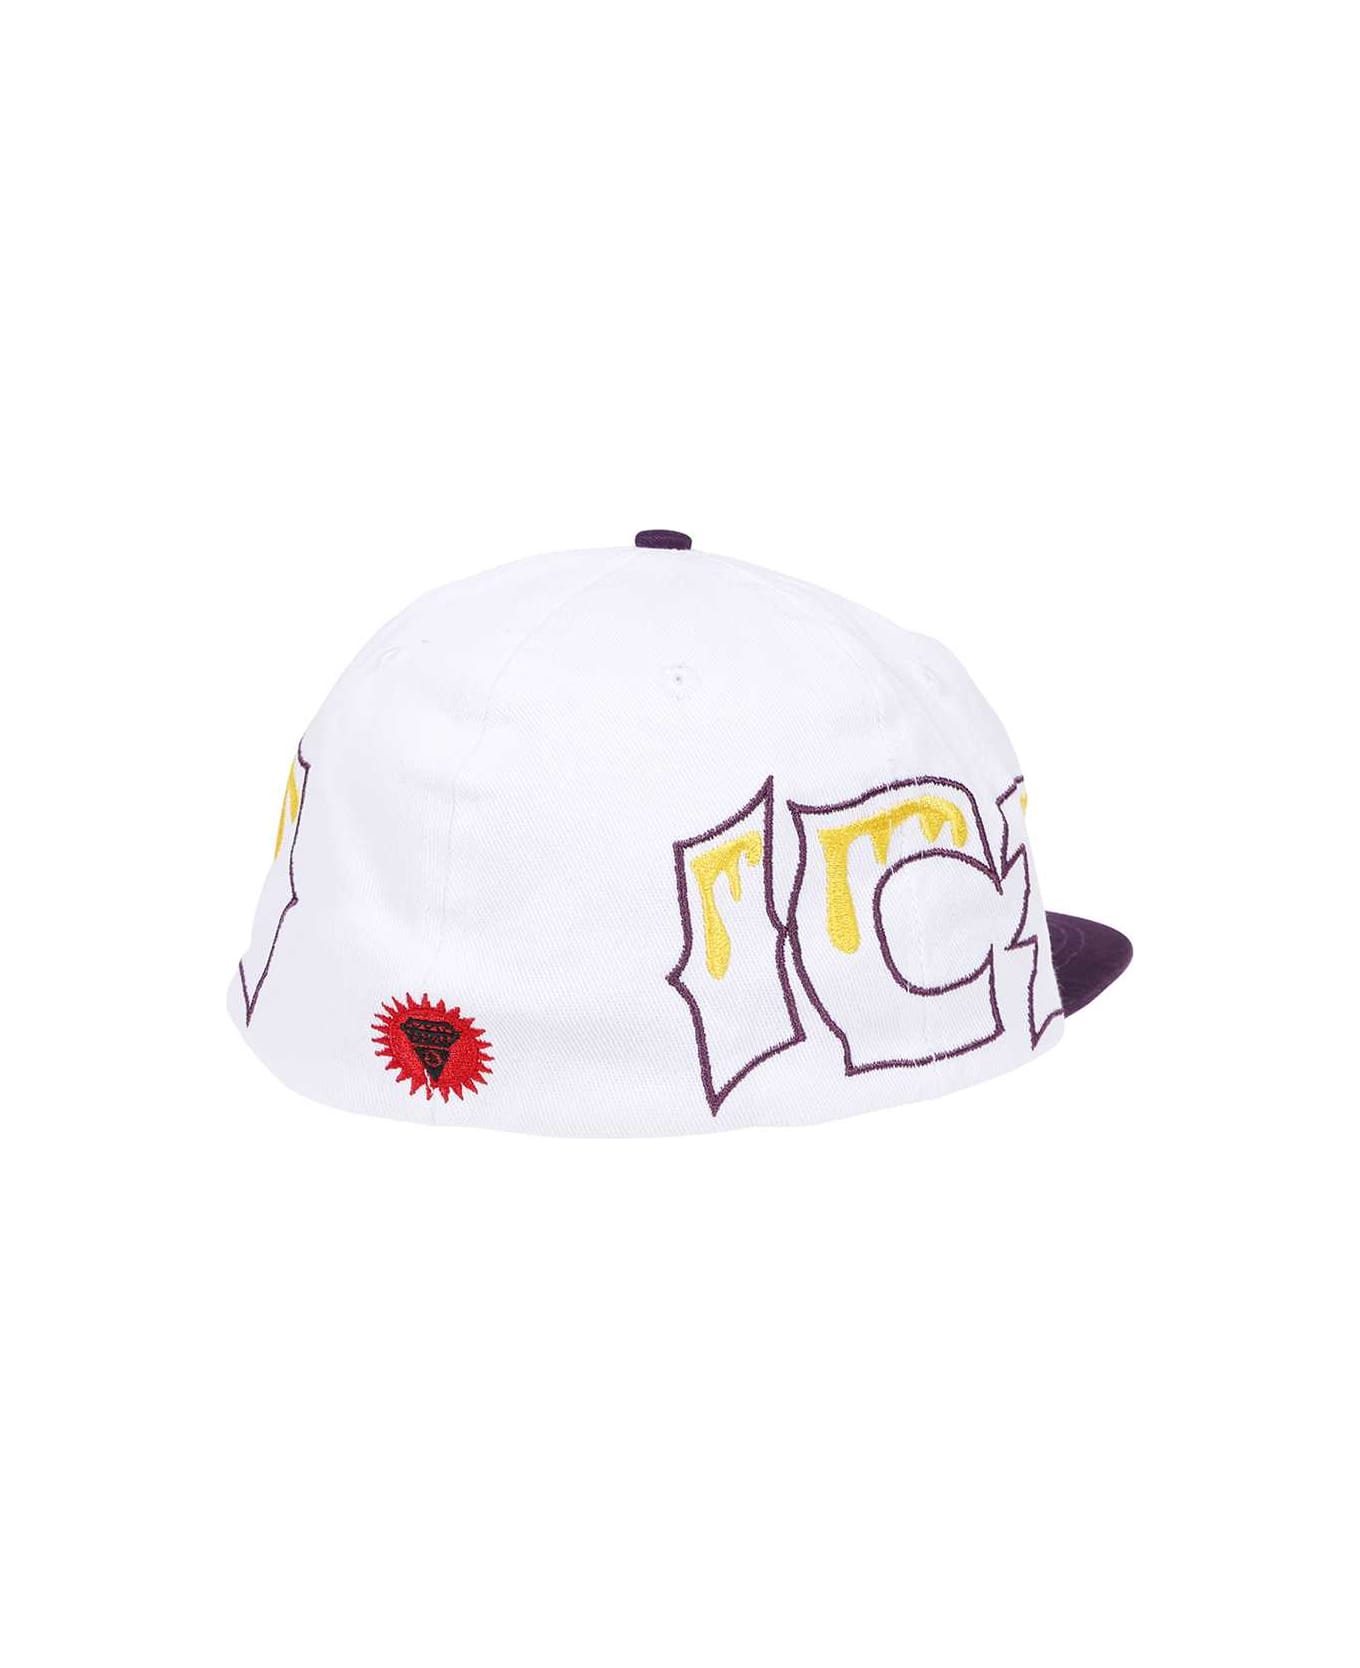 Icecream Baseball Hat With Flat Visor - White